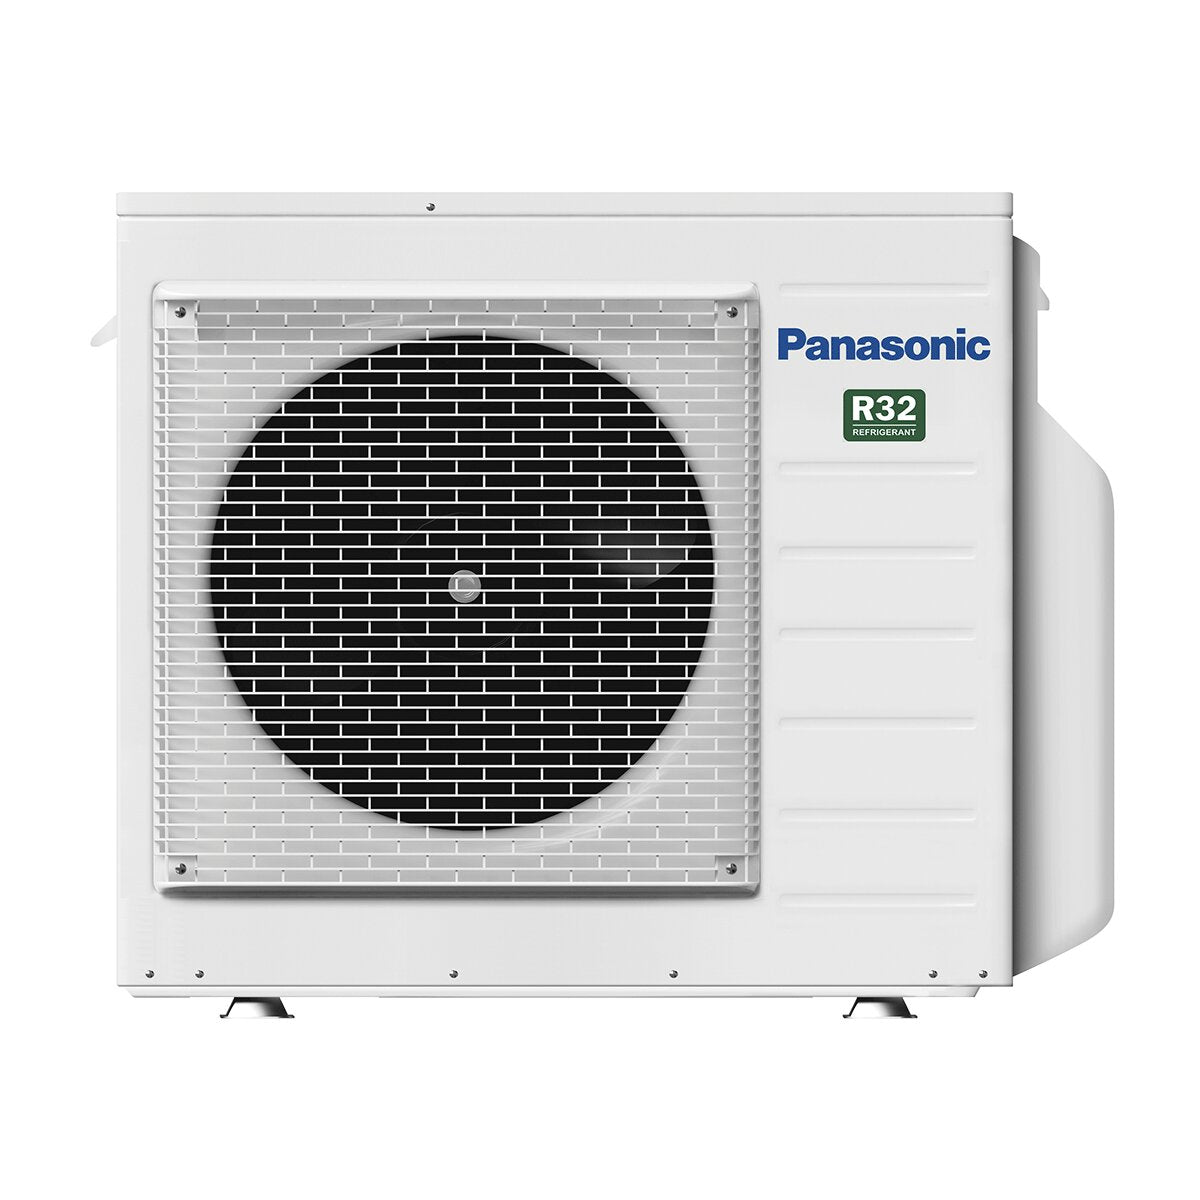 Panasonic TZ Series trial split air conditioner 7000+7000+9000 BTU A+++ wifi external unit 5.2 kW